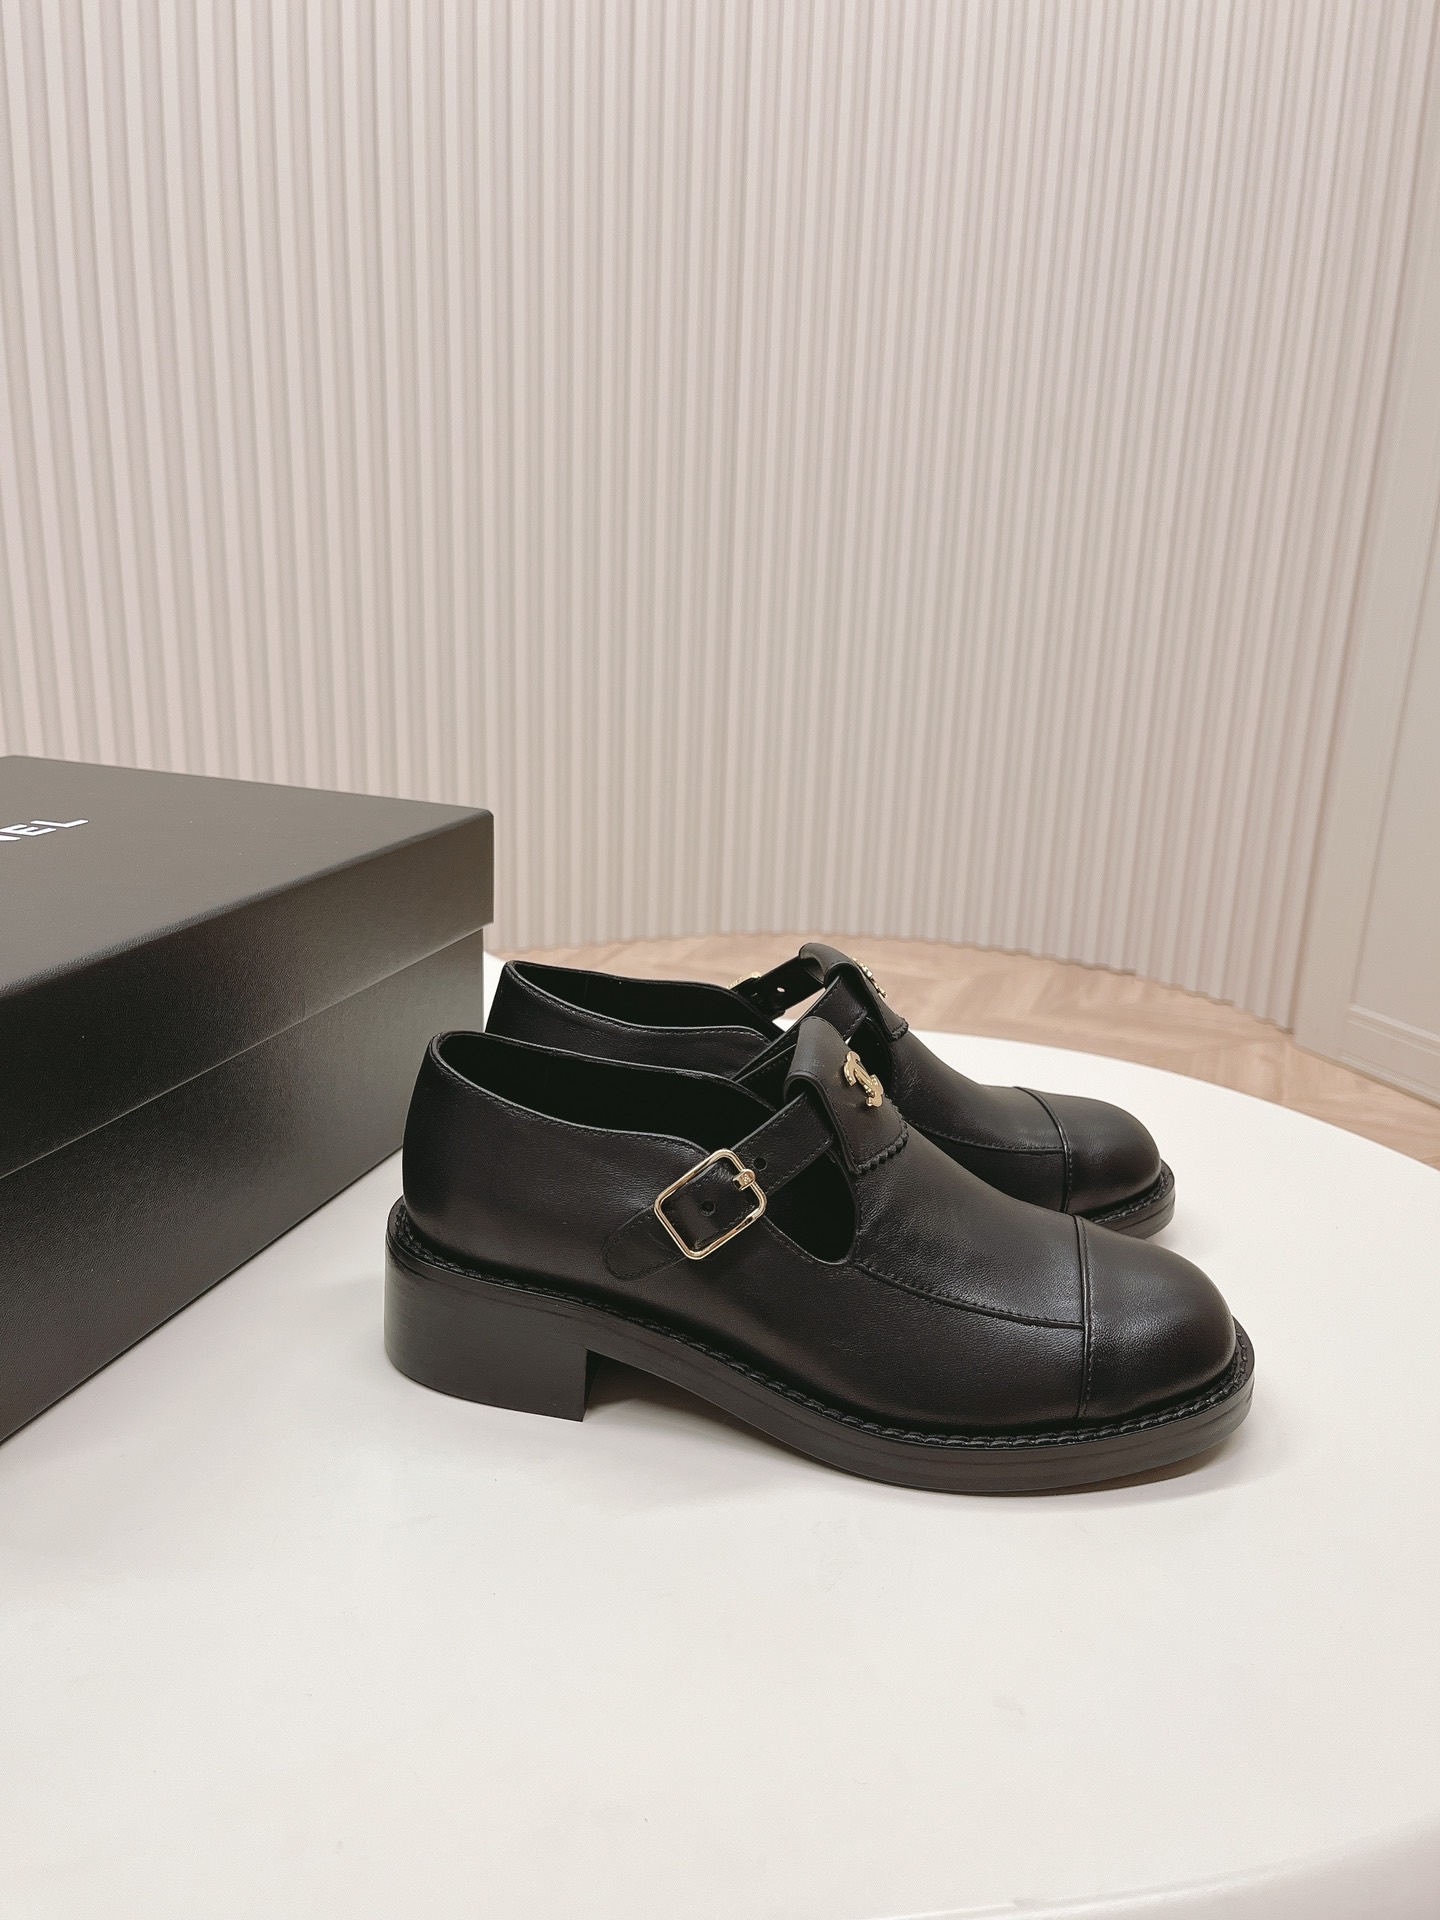 CHANELシャネルの靴Ｎ級品 レザー ファッション ローファーシンプル 厚い靴底 歩きやすい ブラック_5